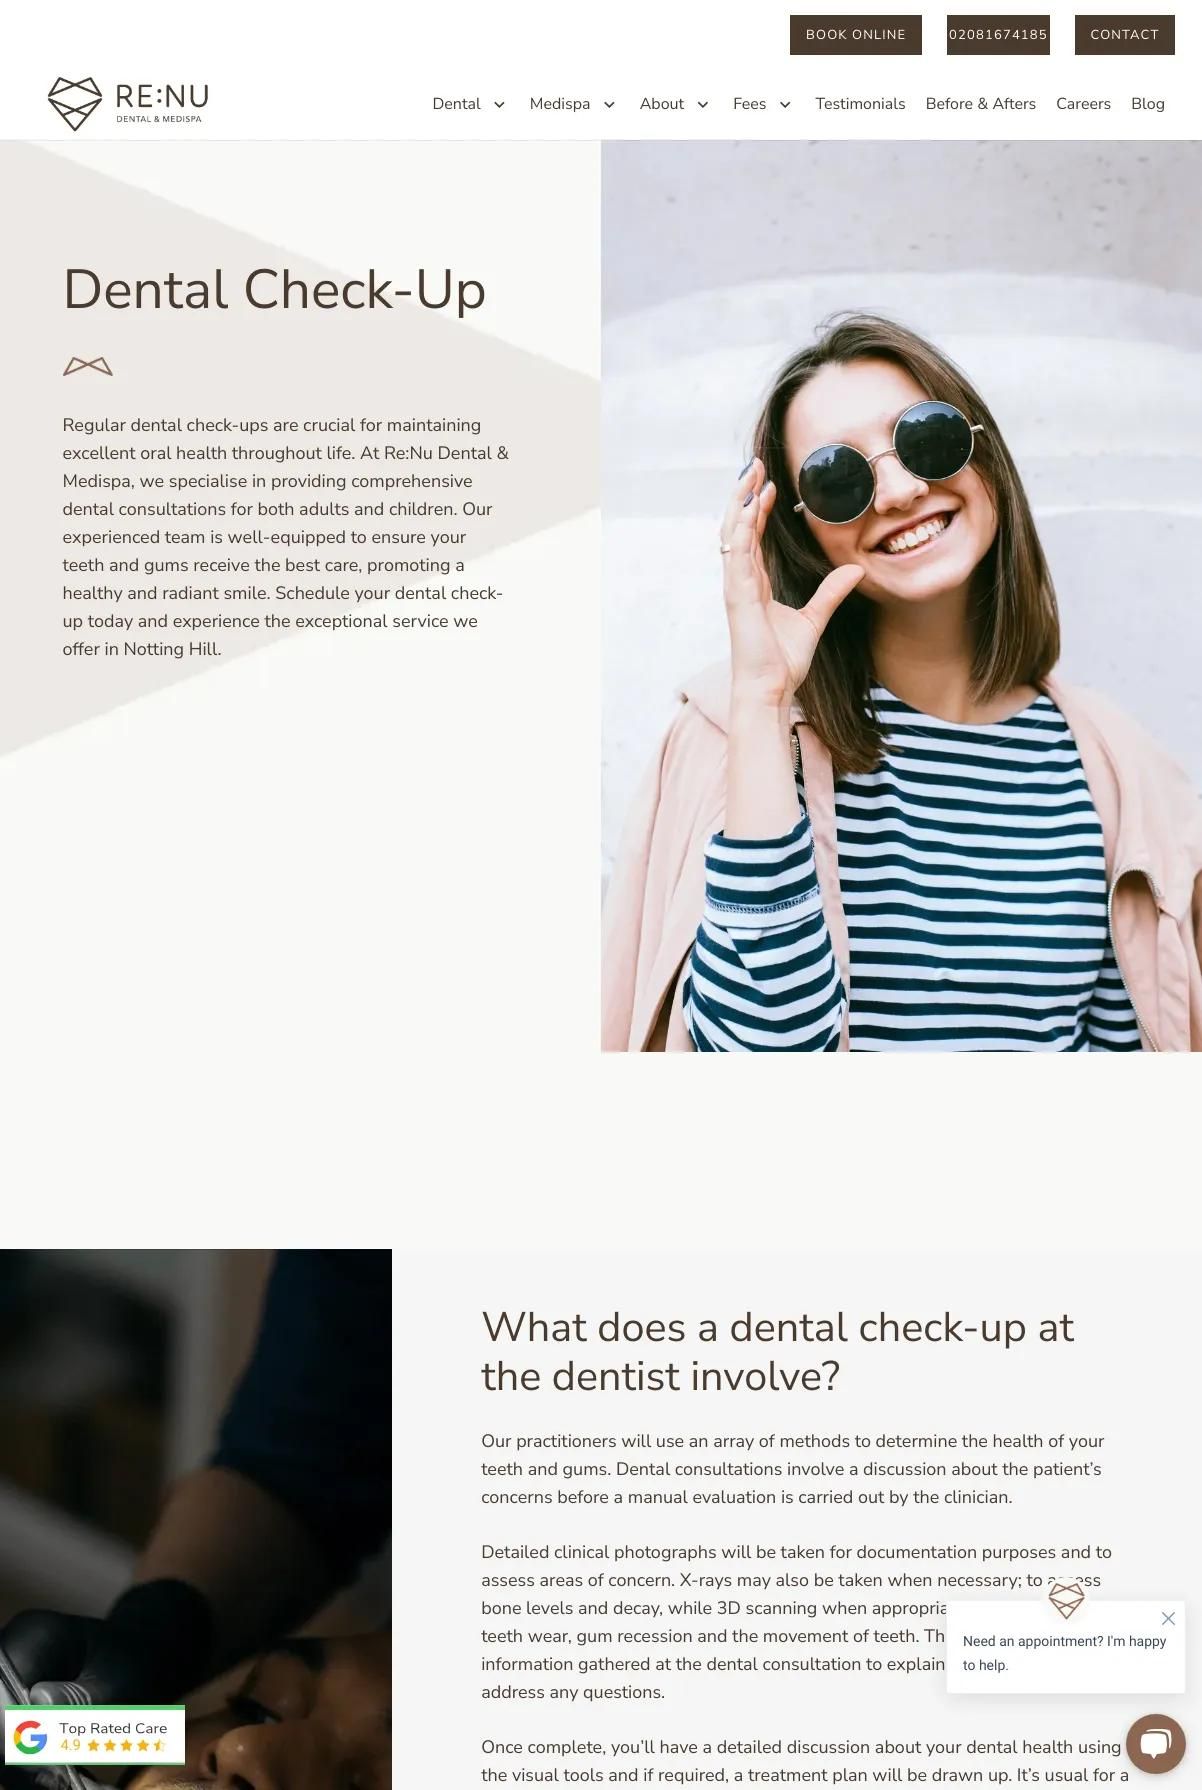 Screenshot 2 of Re:nu Dental and Medispa (Example Squarespace Dentist Website)